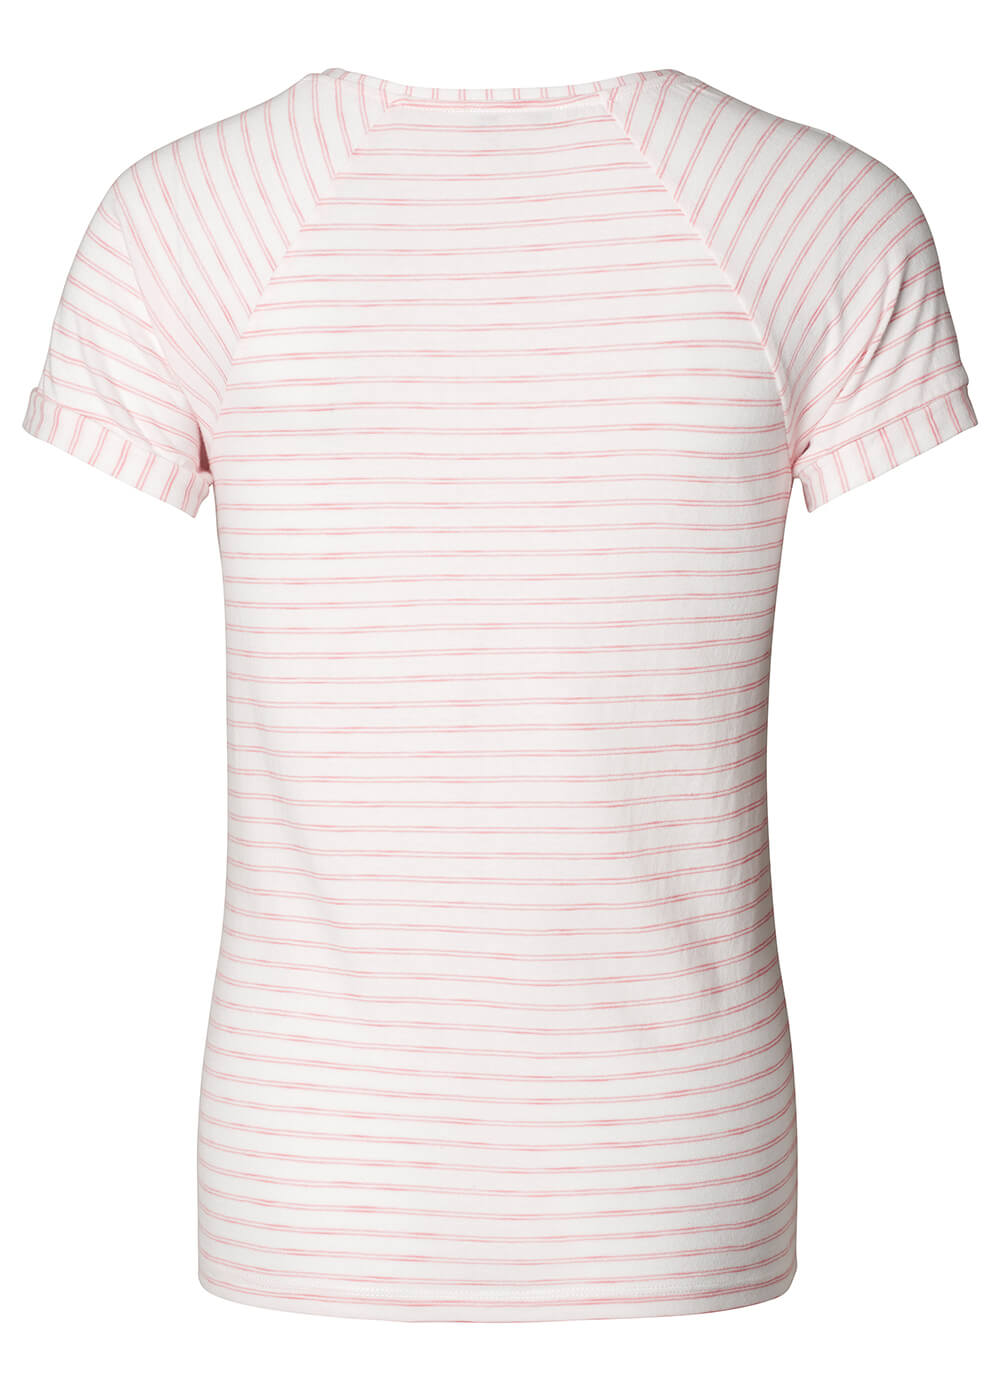 Raglan Maternity T-Shirt in Pink Stripes by Esprit